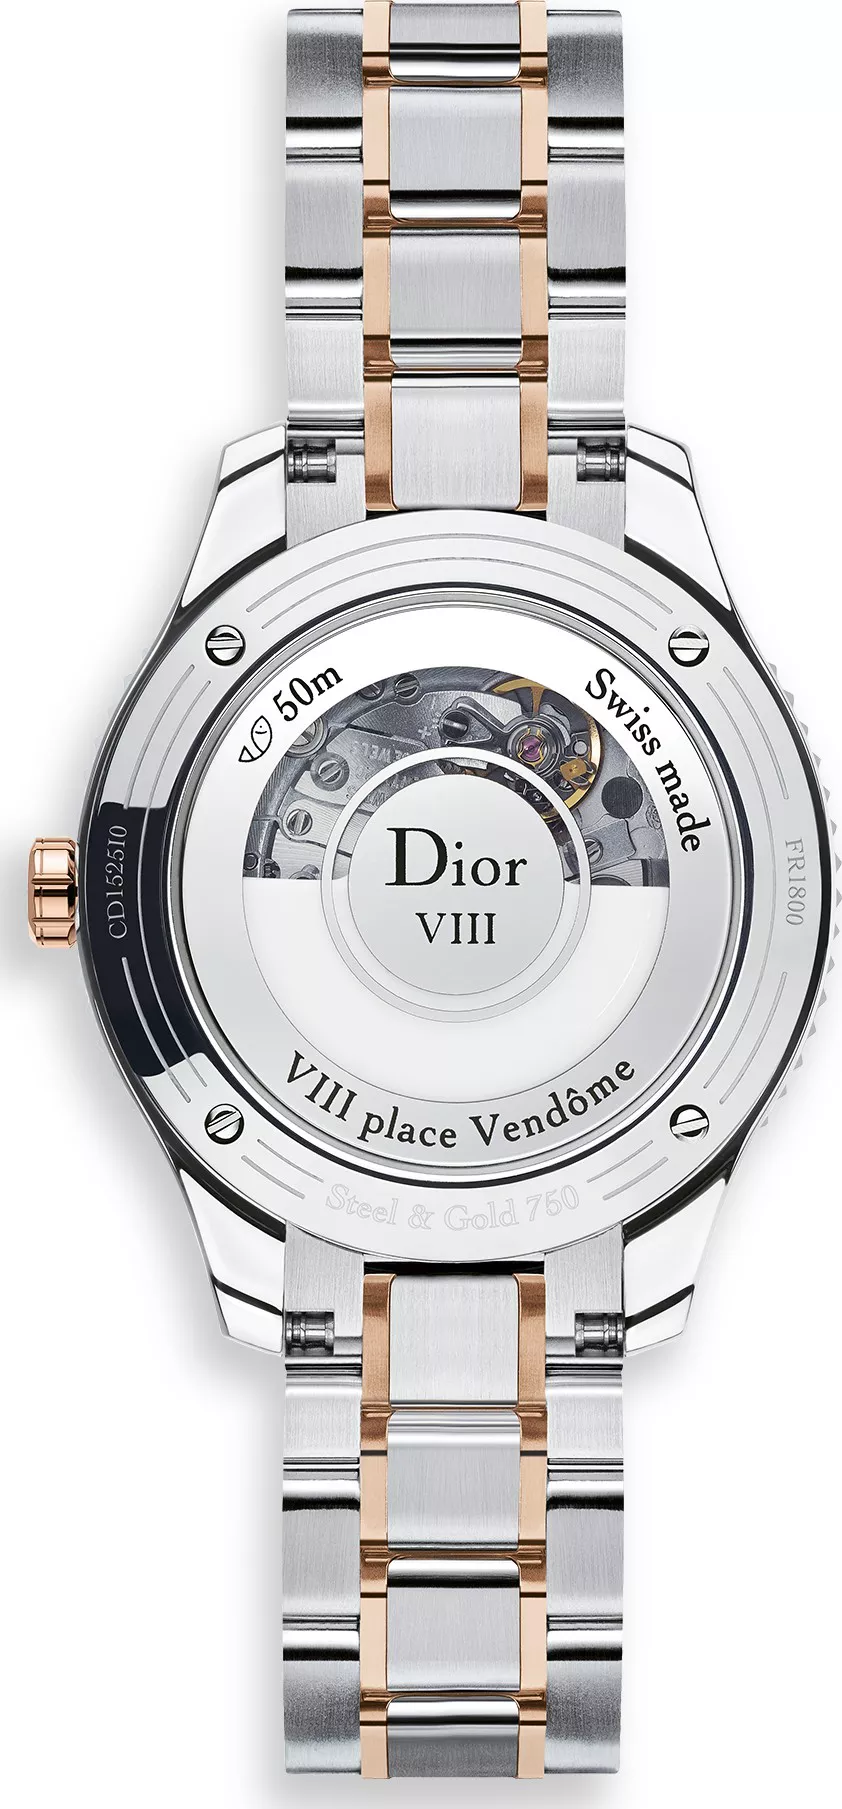 Christian Dior Dior VIII CD1525I0M001 Diamonds Watch 32